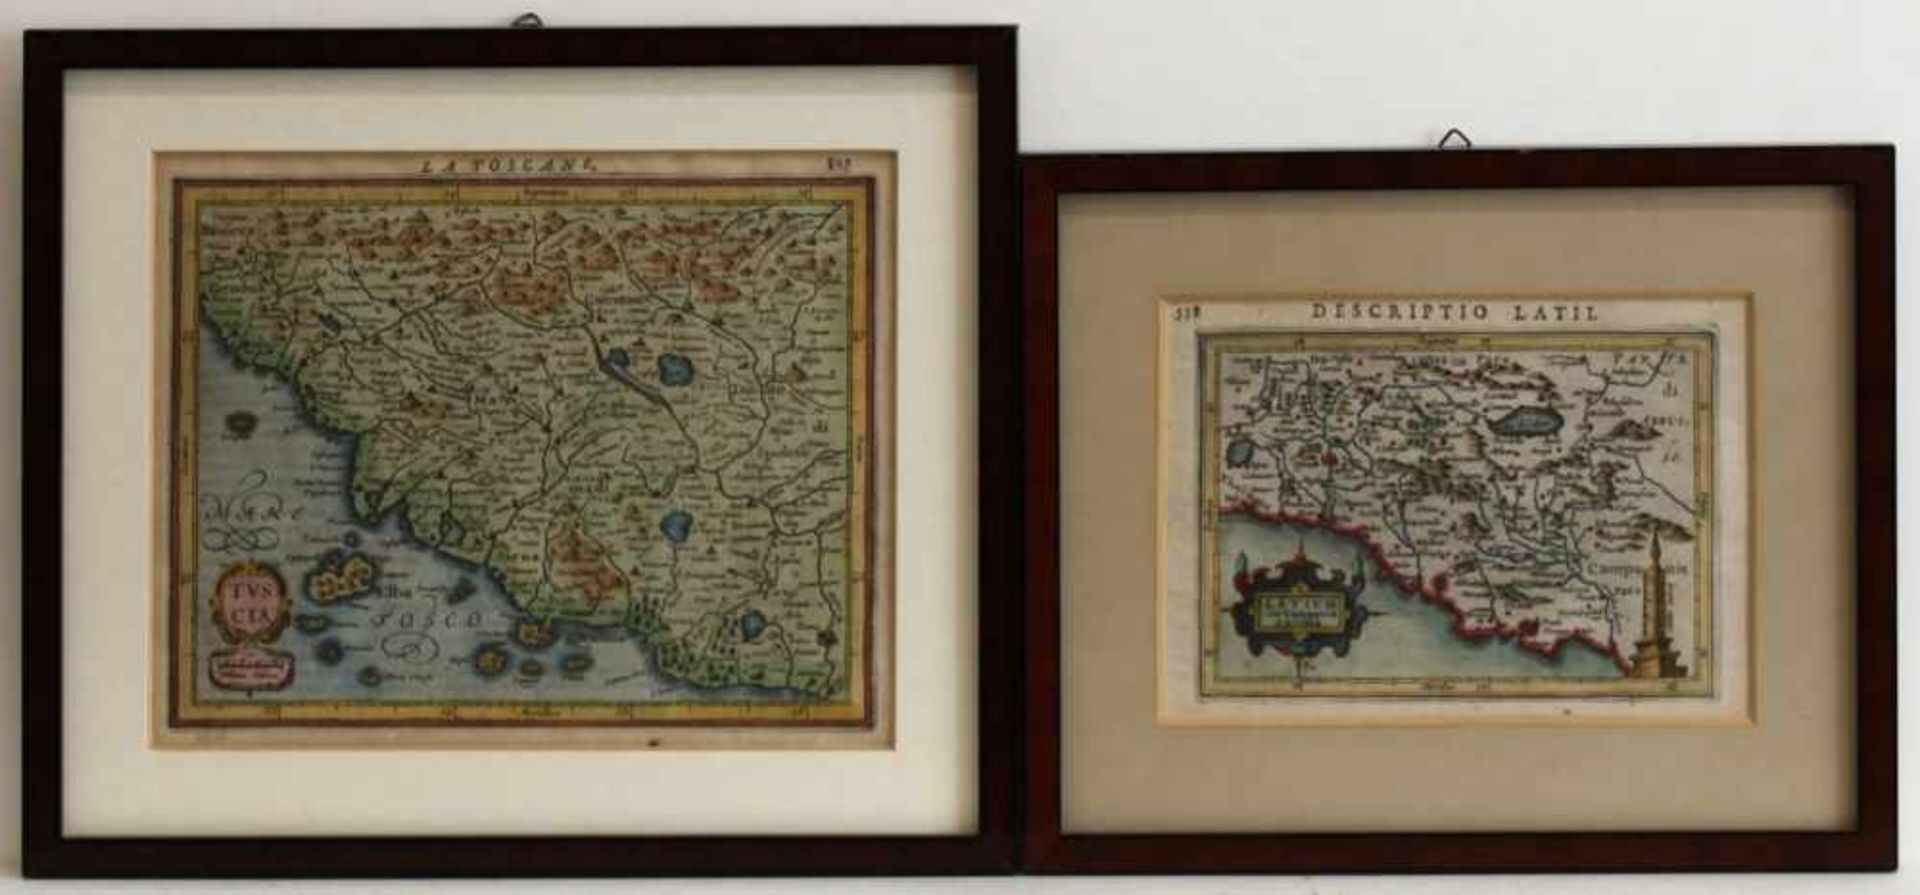 Italien. Toskana.Kolorierte Kupferstichkarte aus Mercator "Atlas minor", 1609. Bildgröße 18 x 14 cm.